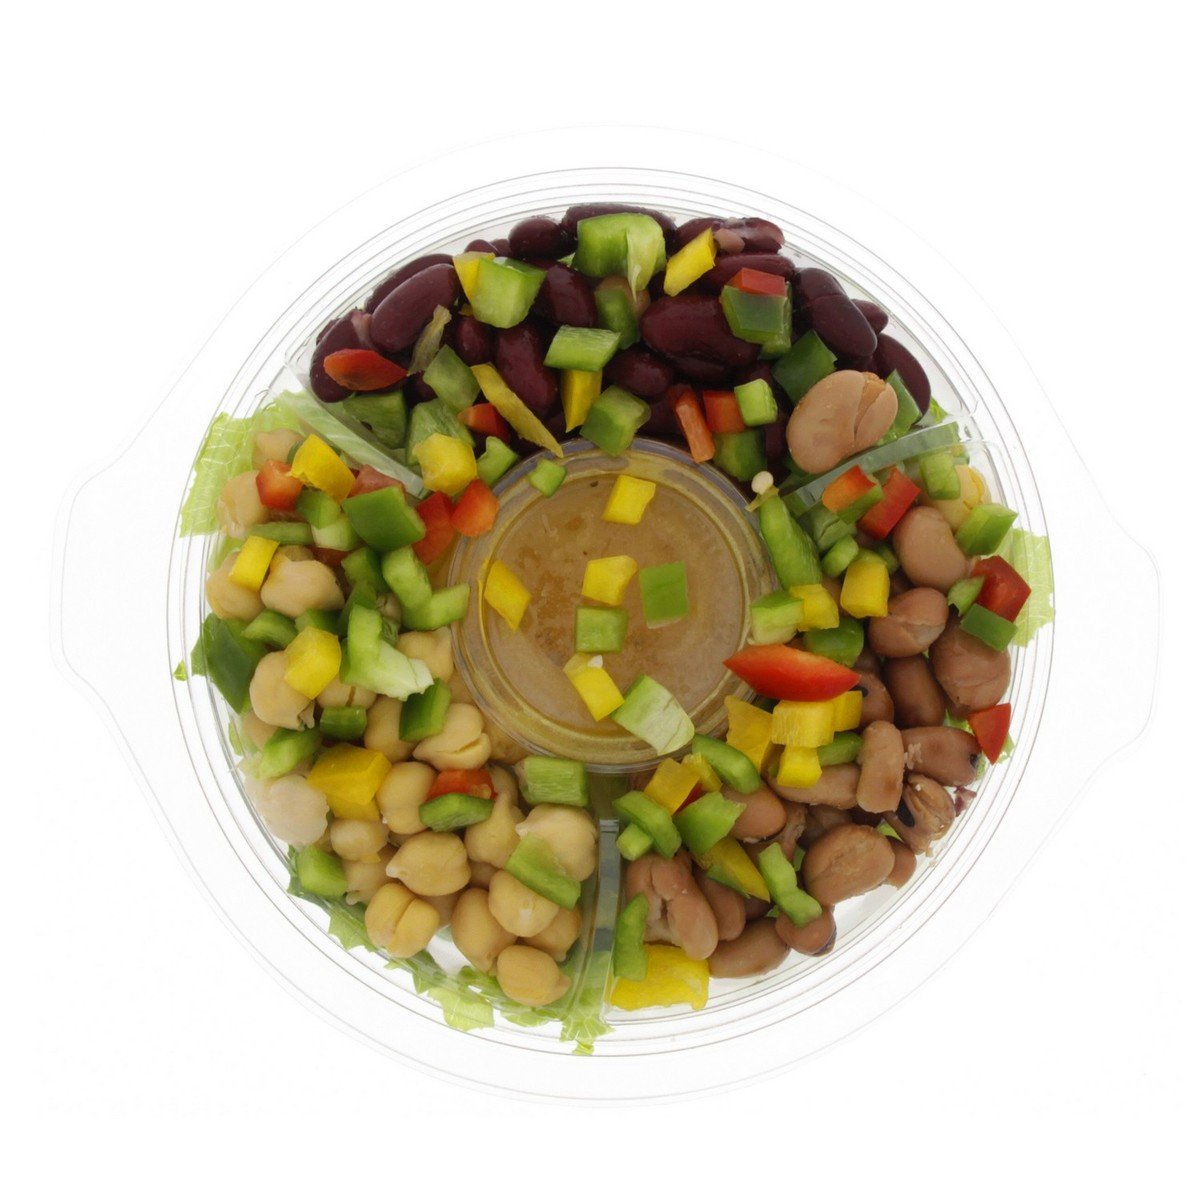 Three Beans Salad Bowl 400g